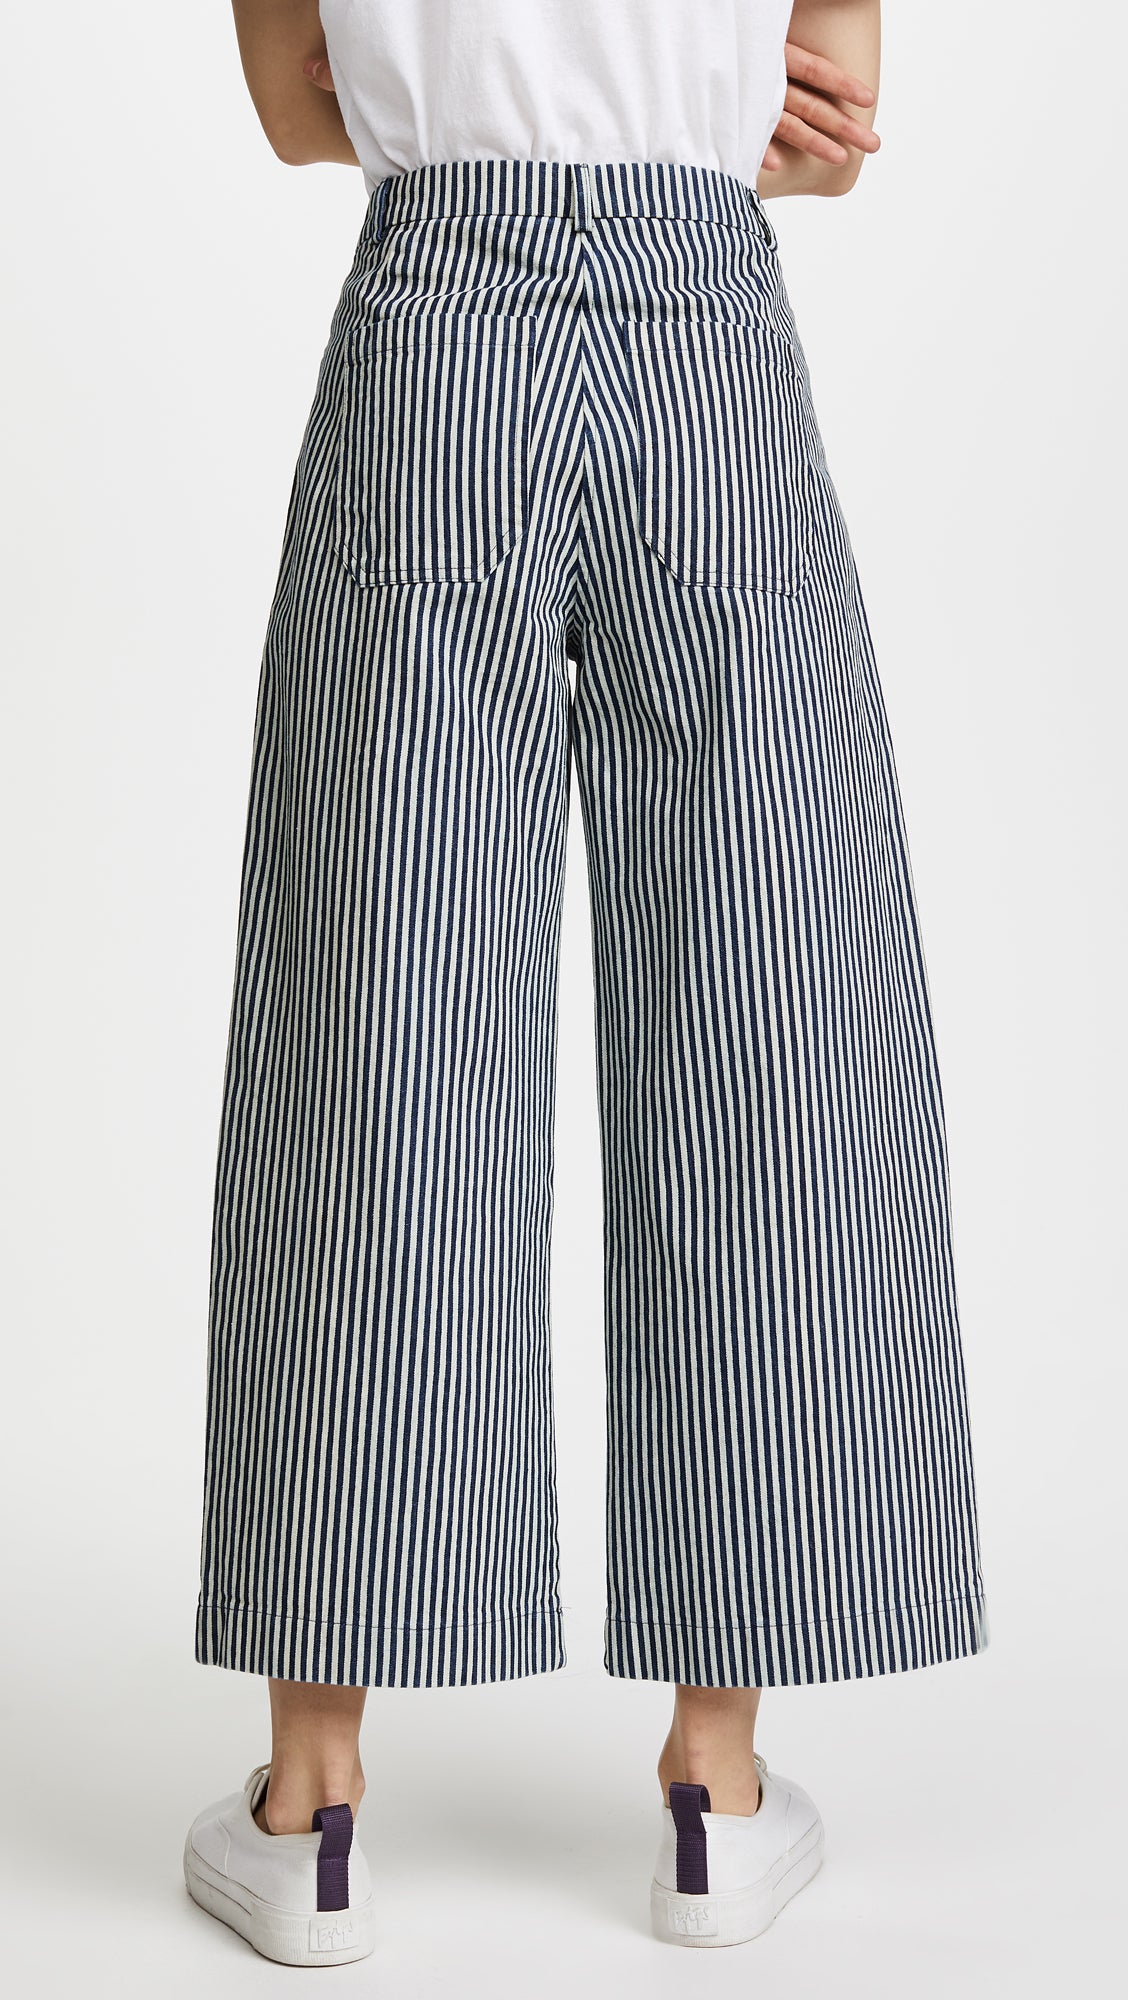 Simone Jeans, Striped